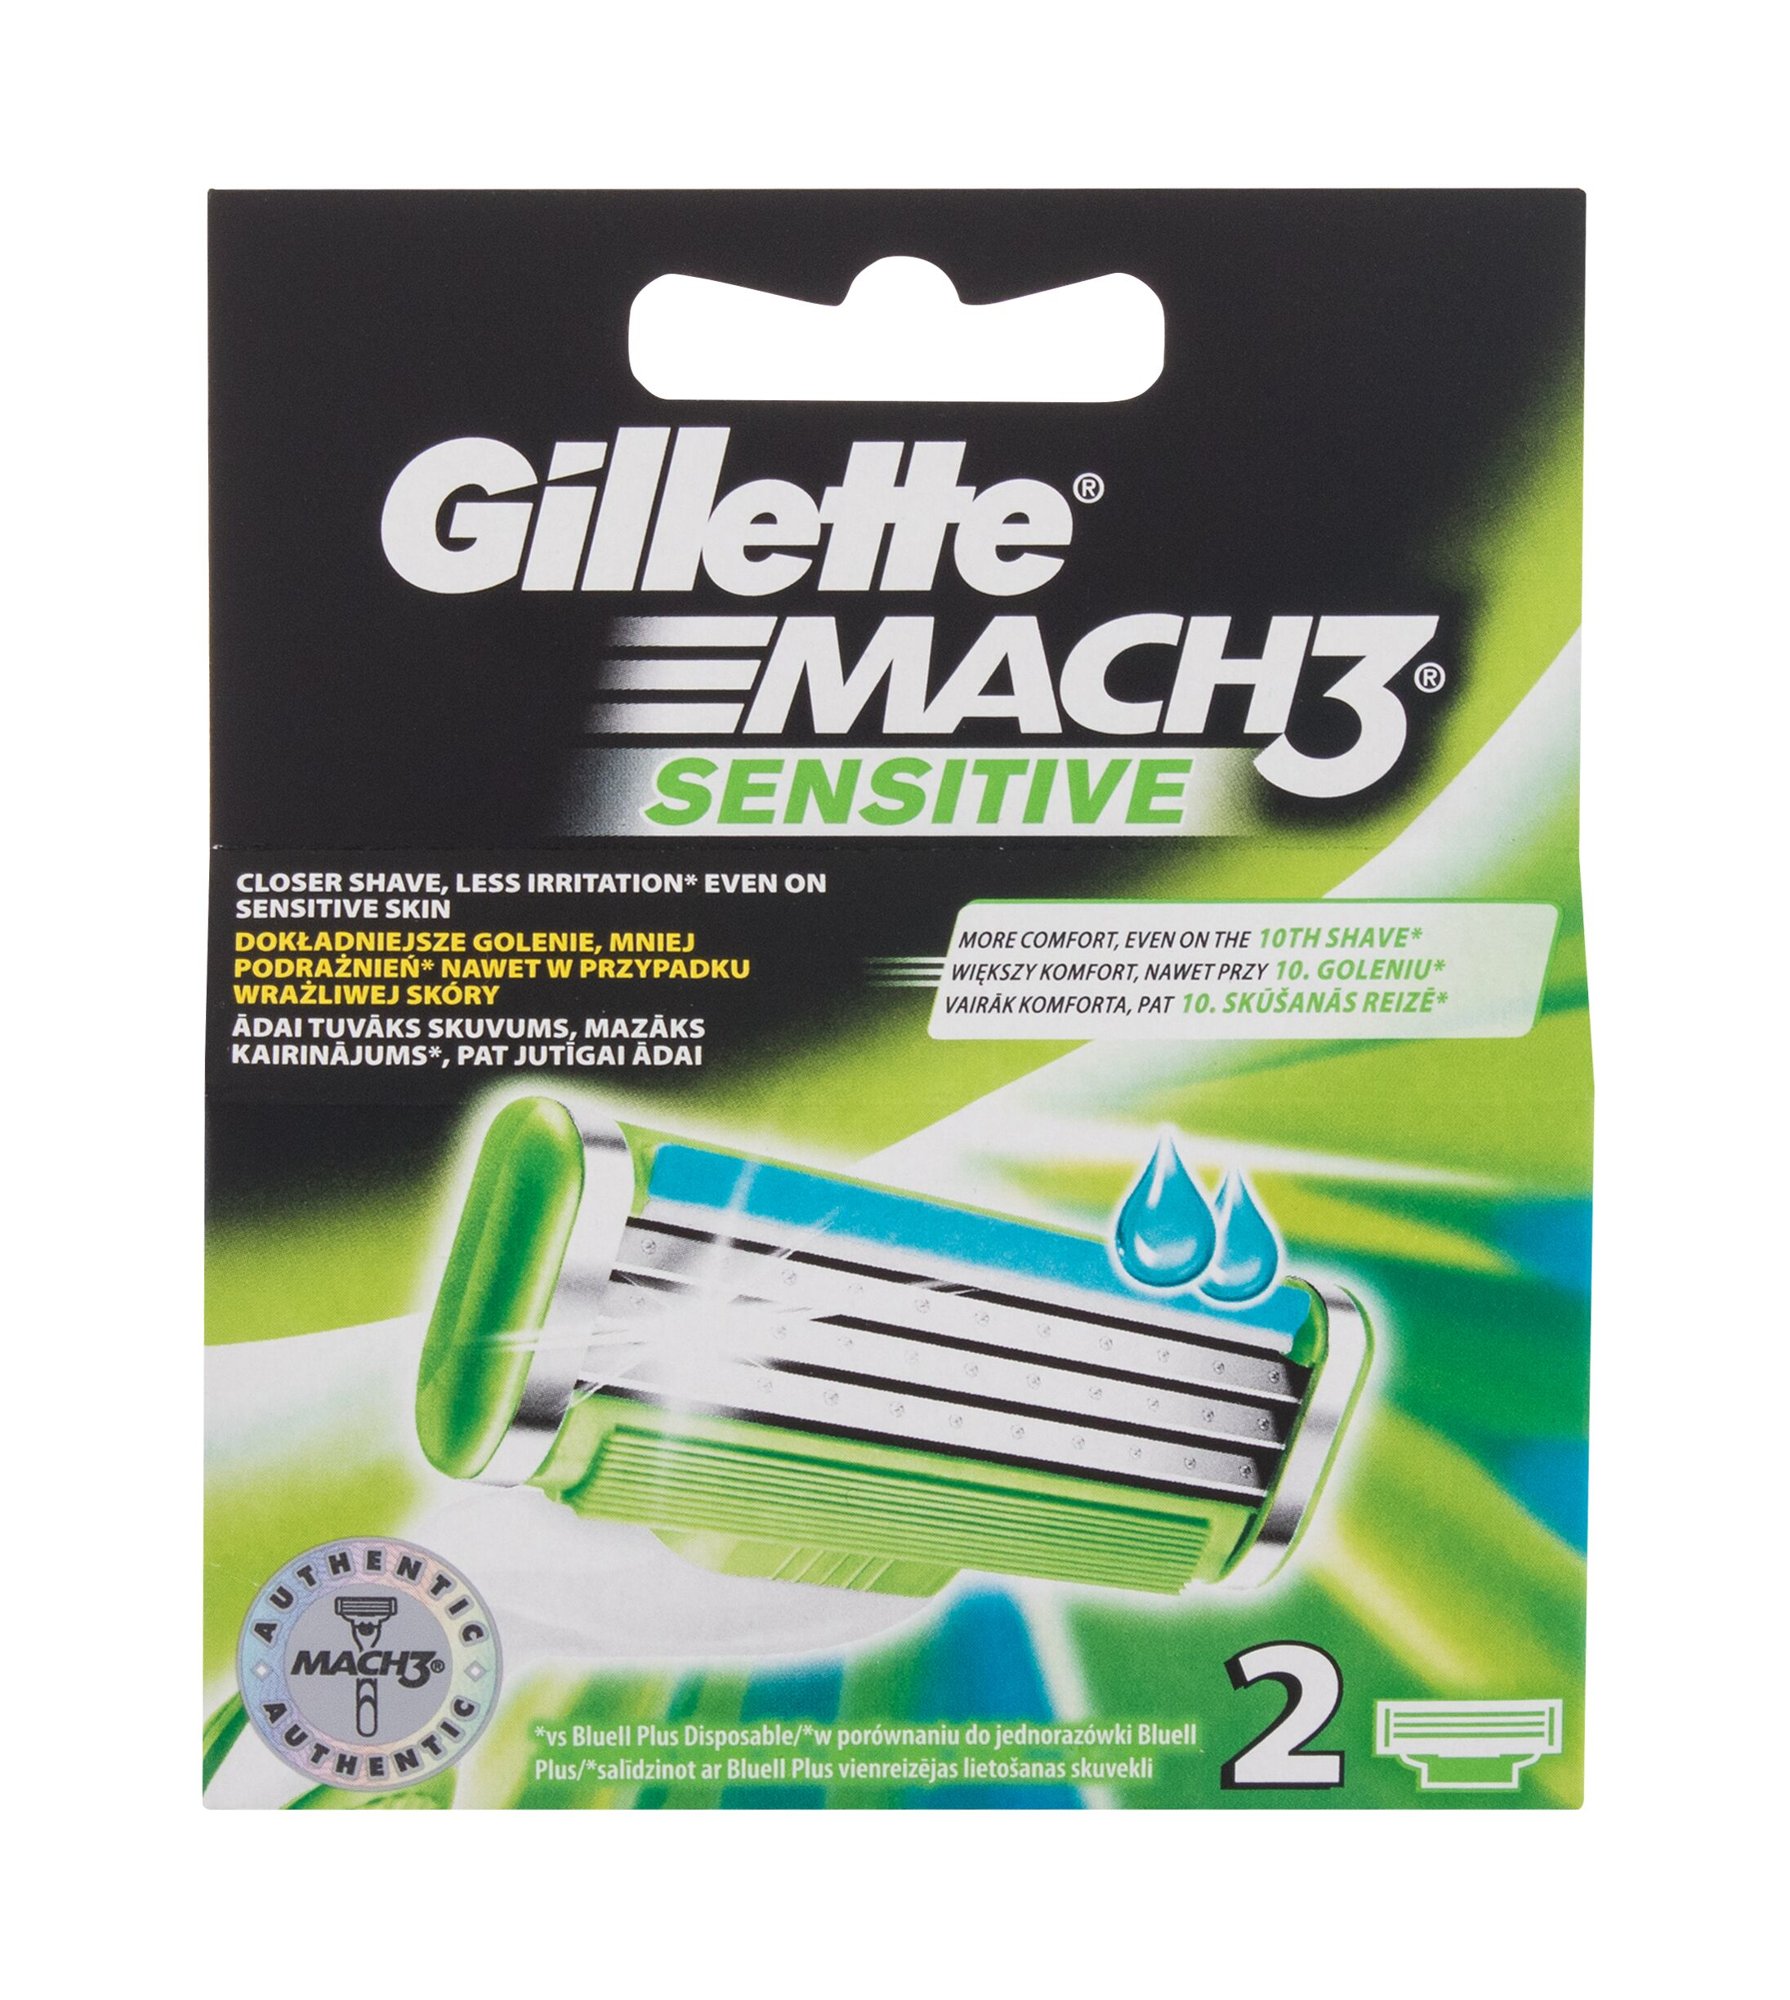 Gillette Mach3 Sensitive skustuvo galvutė